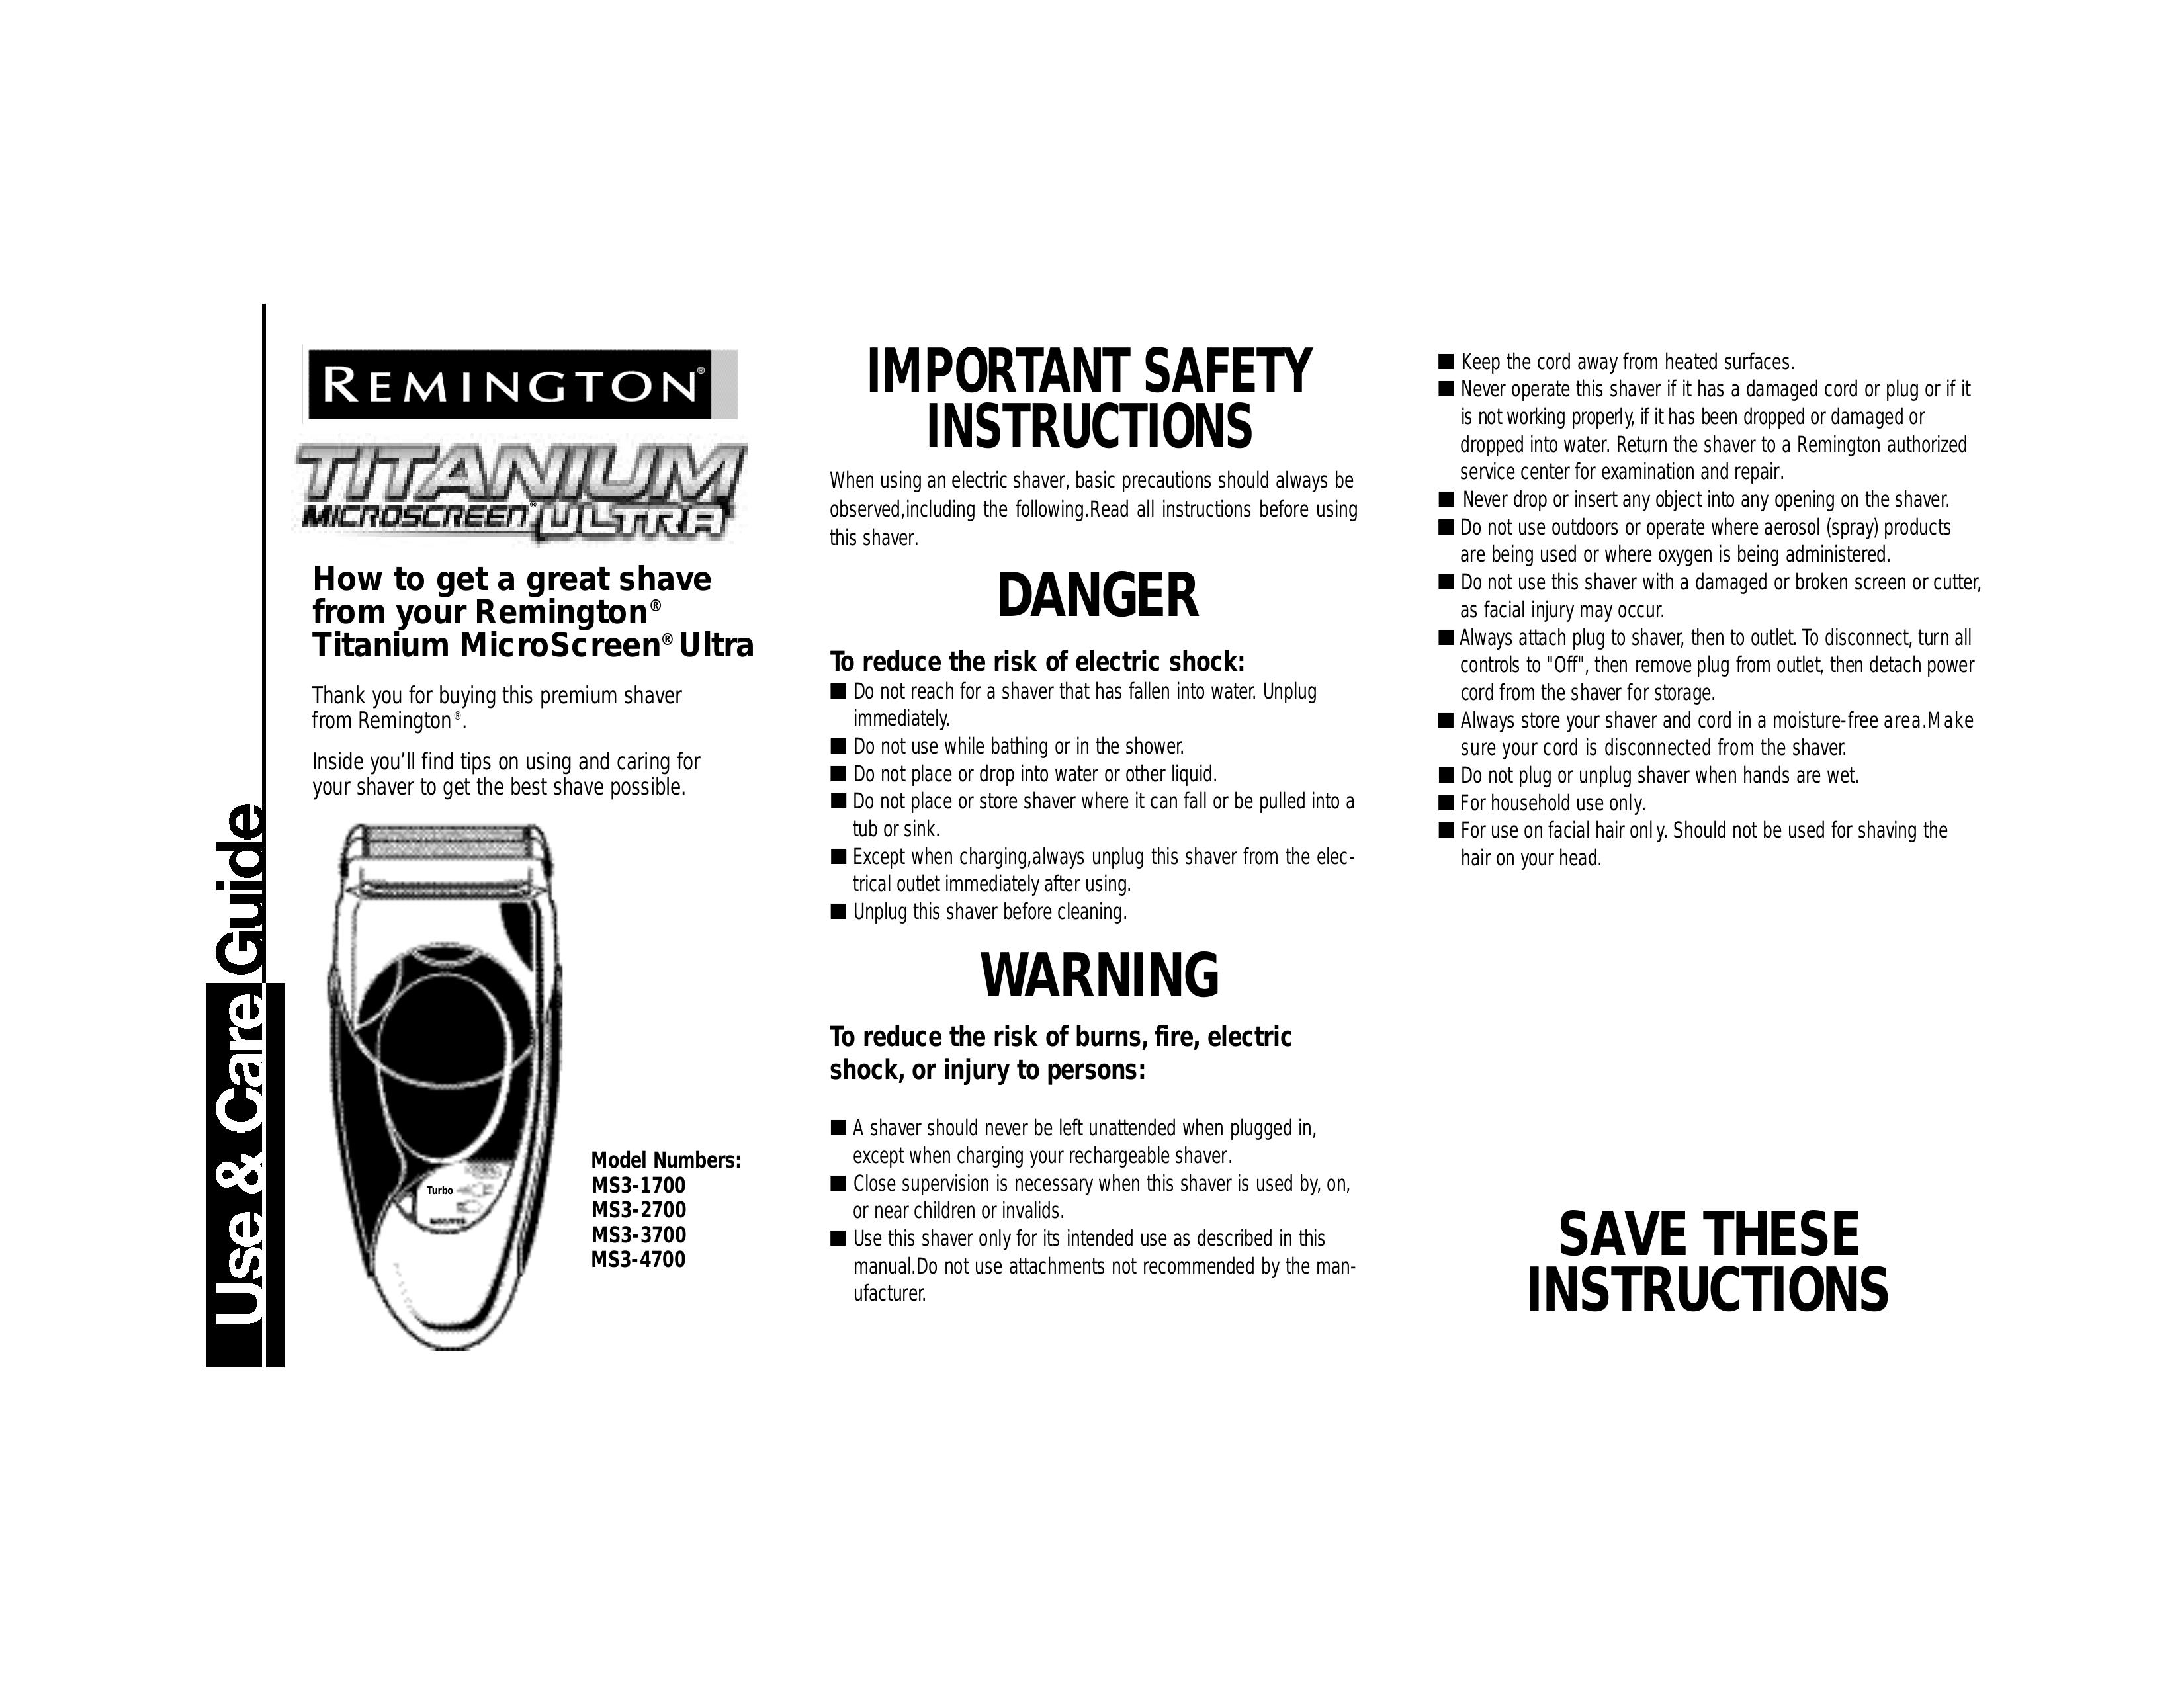 Remington MS3-1700 Electric Shaver User Manual